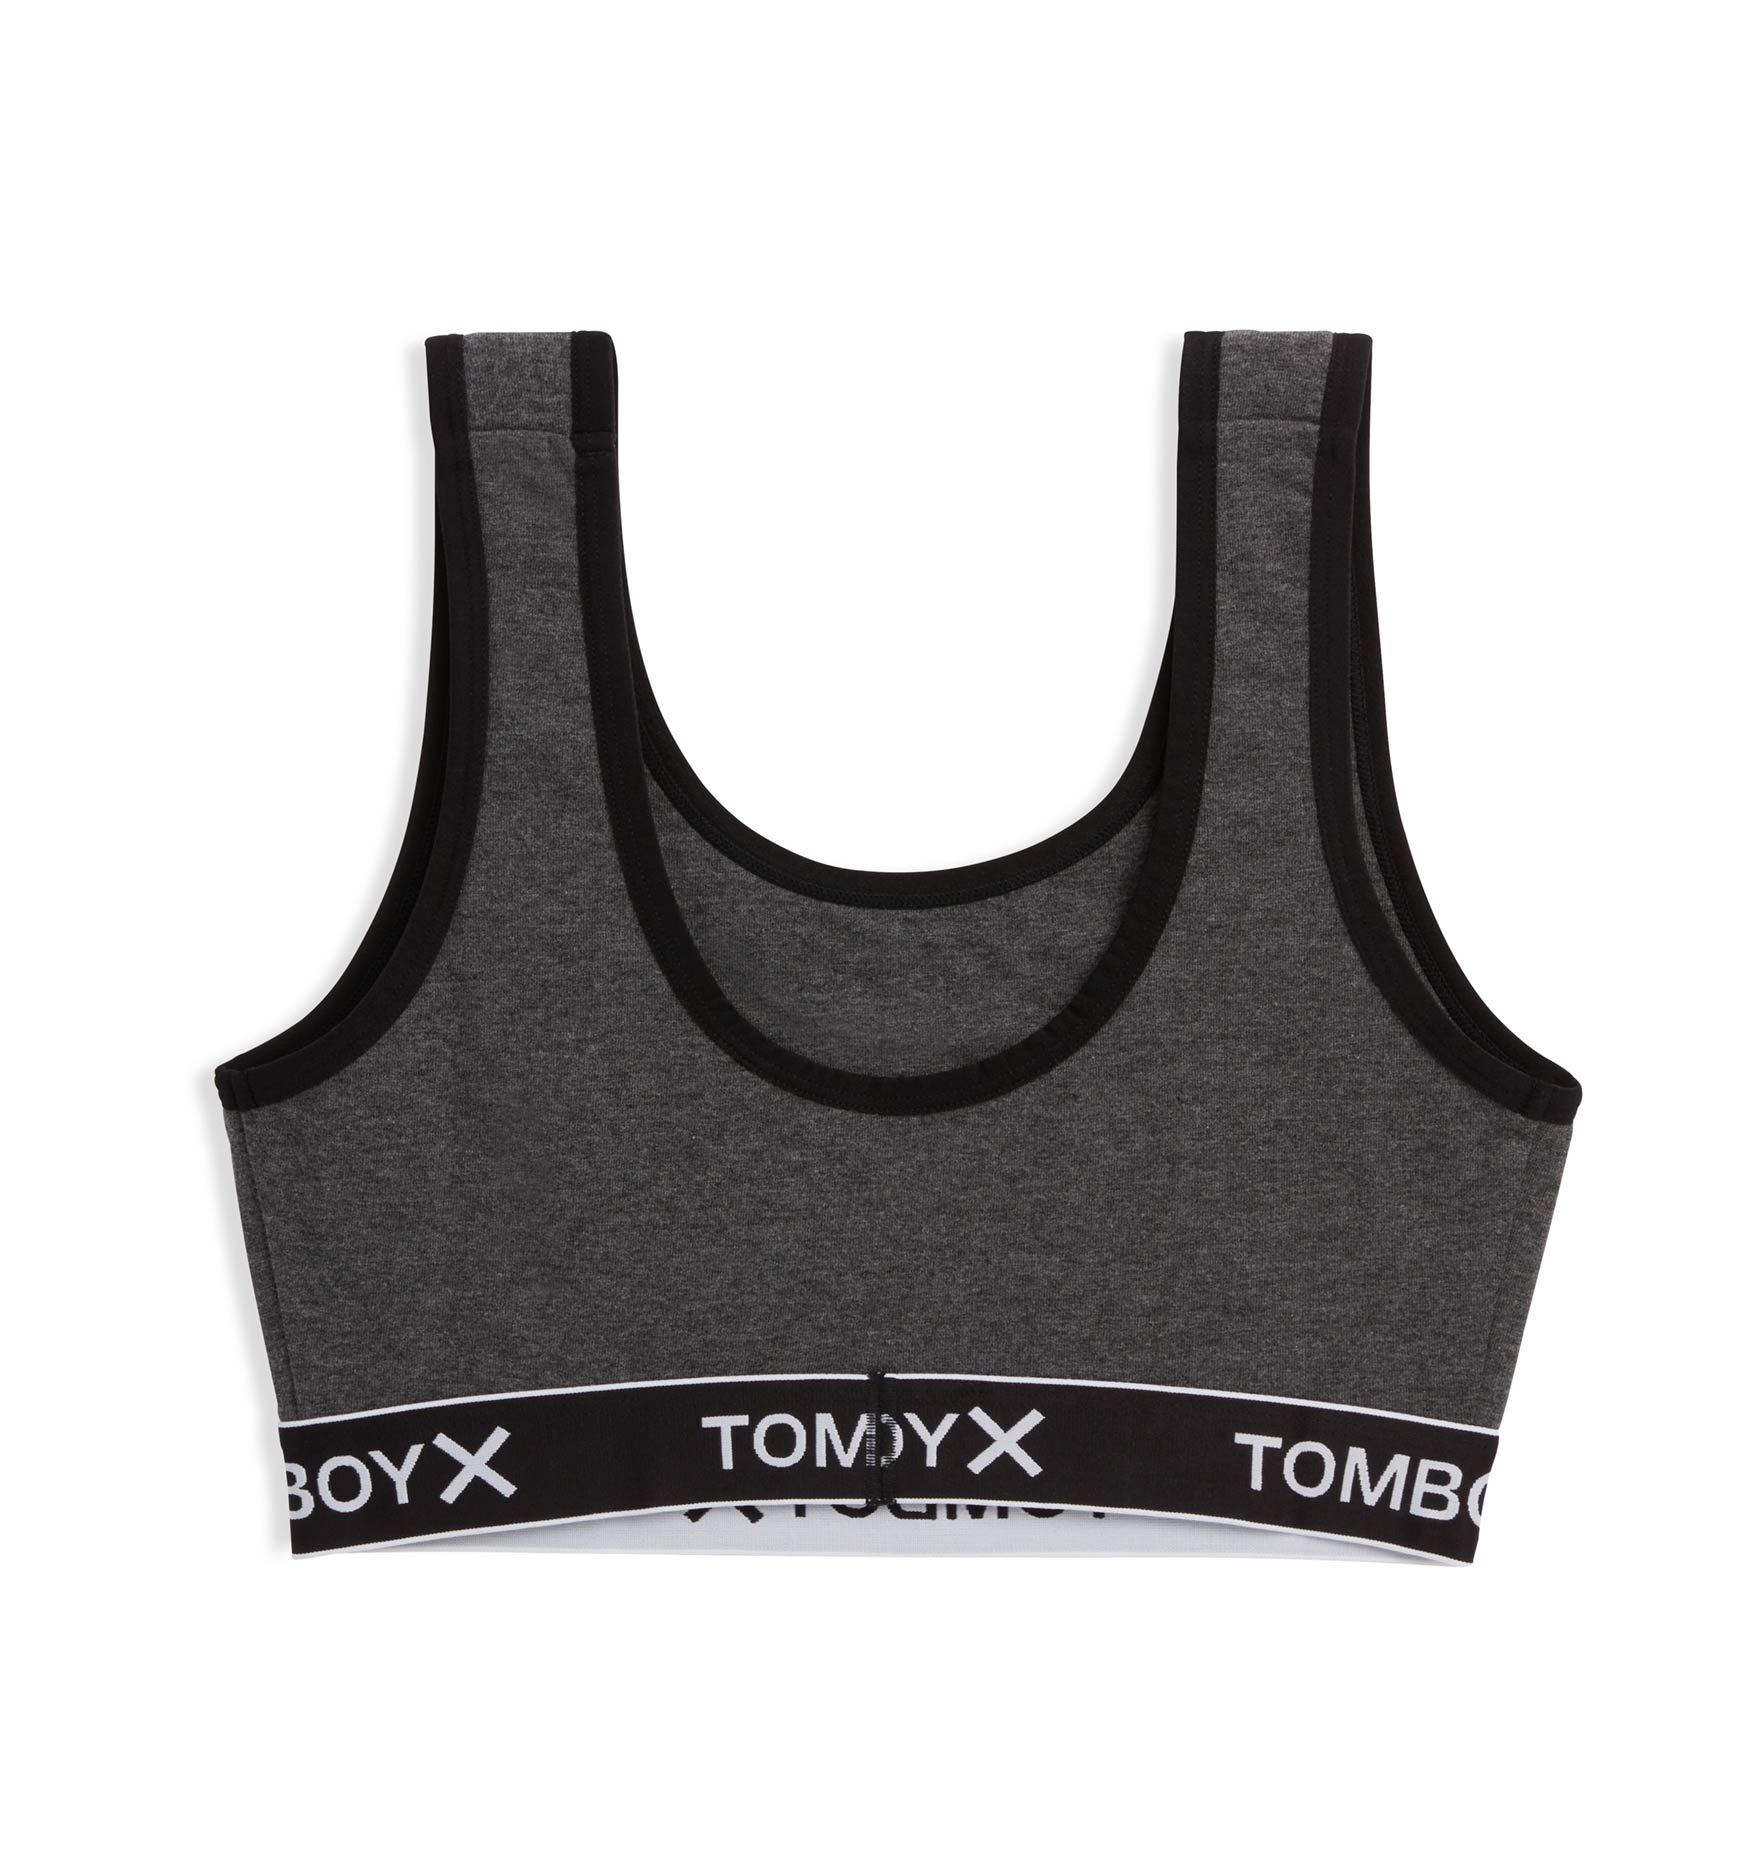 Wholesale tomboy cotton bra For Supportive Underwear 